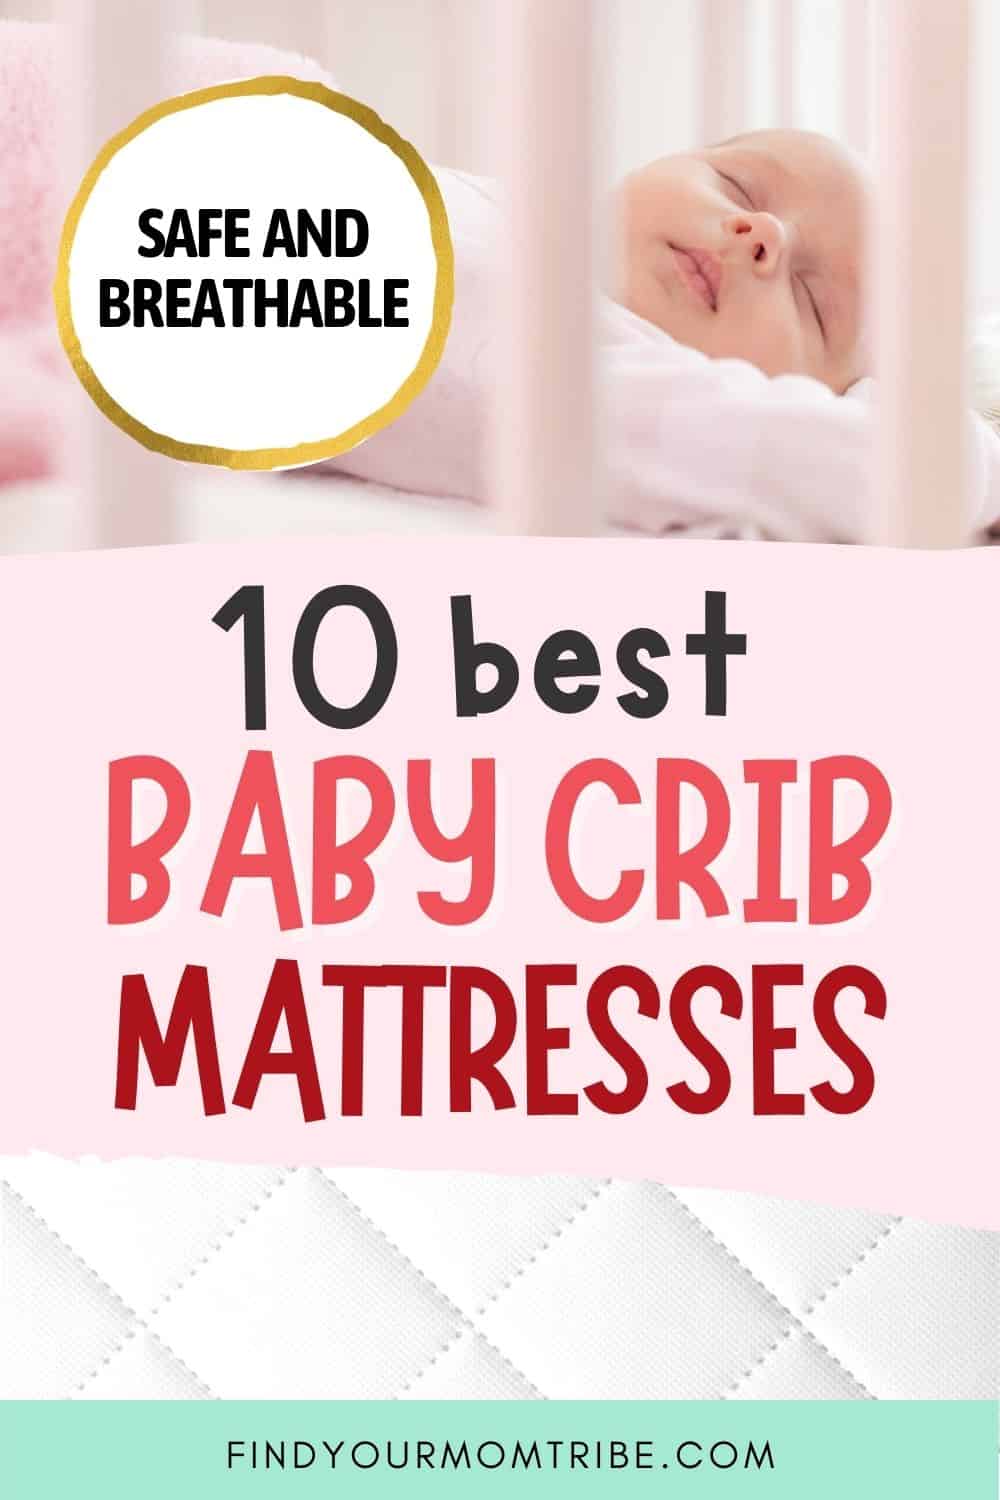 best baby crib mattresses Pinterest